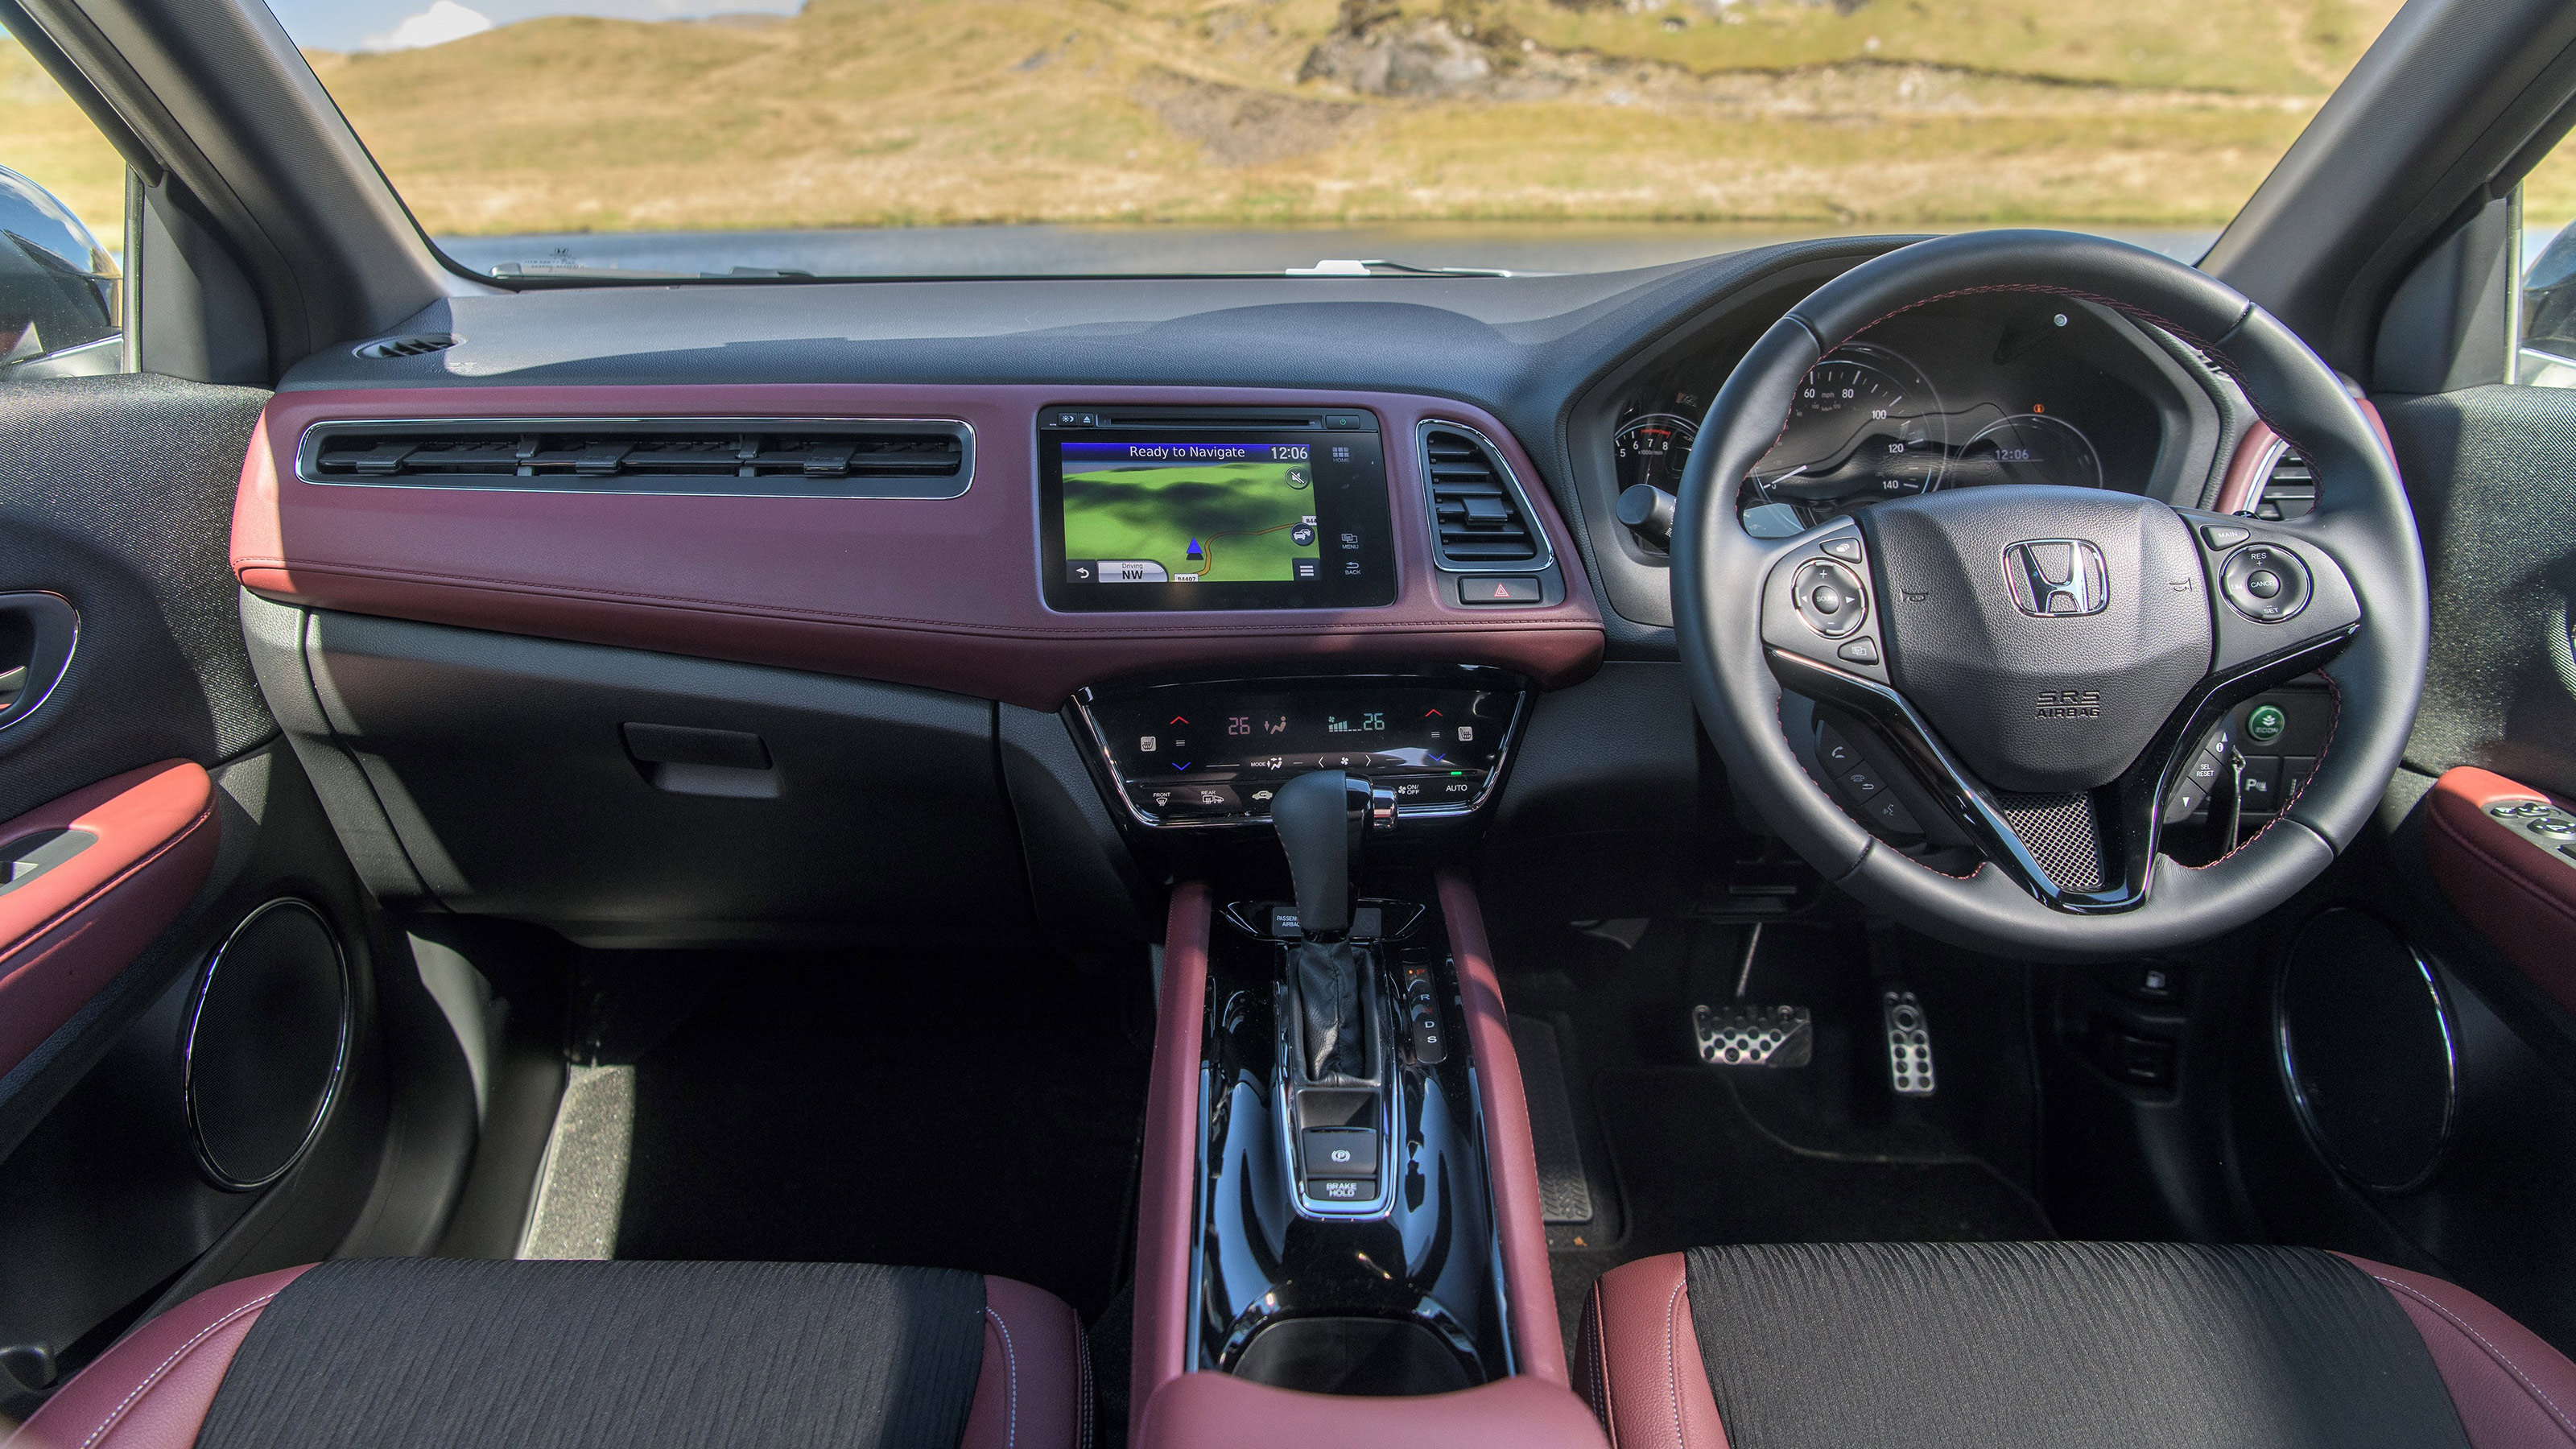 Honda HR-V SUV - Interior & comfort 2020 review | Carbuyer